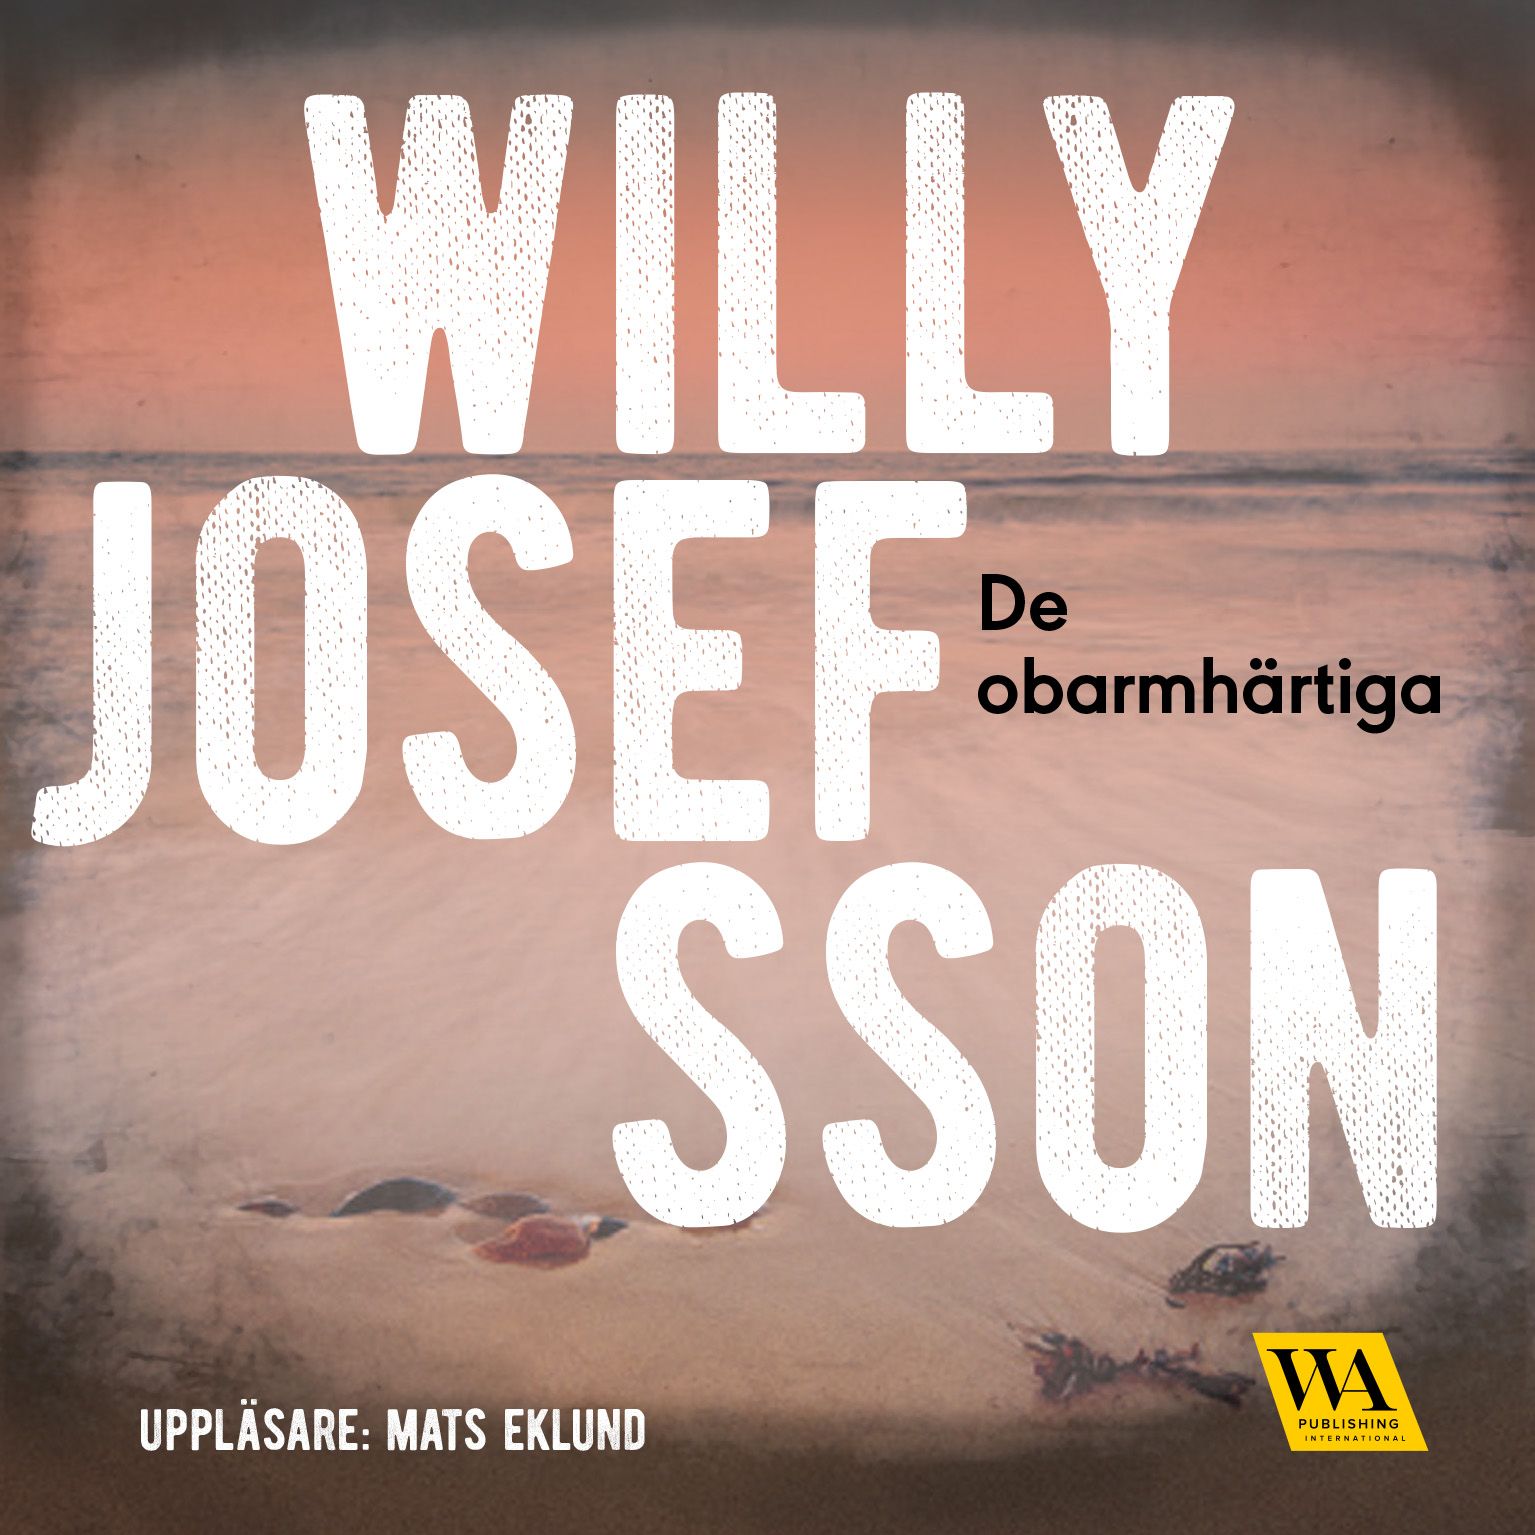 De obarmhärtiga, lydbog af Willy Josefsson